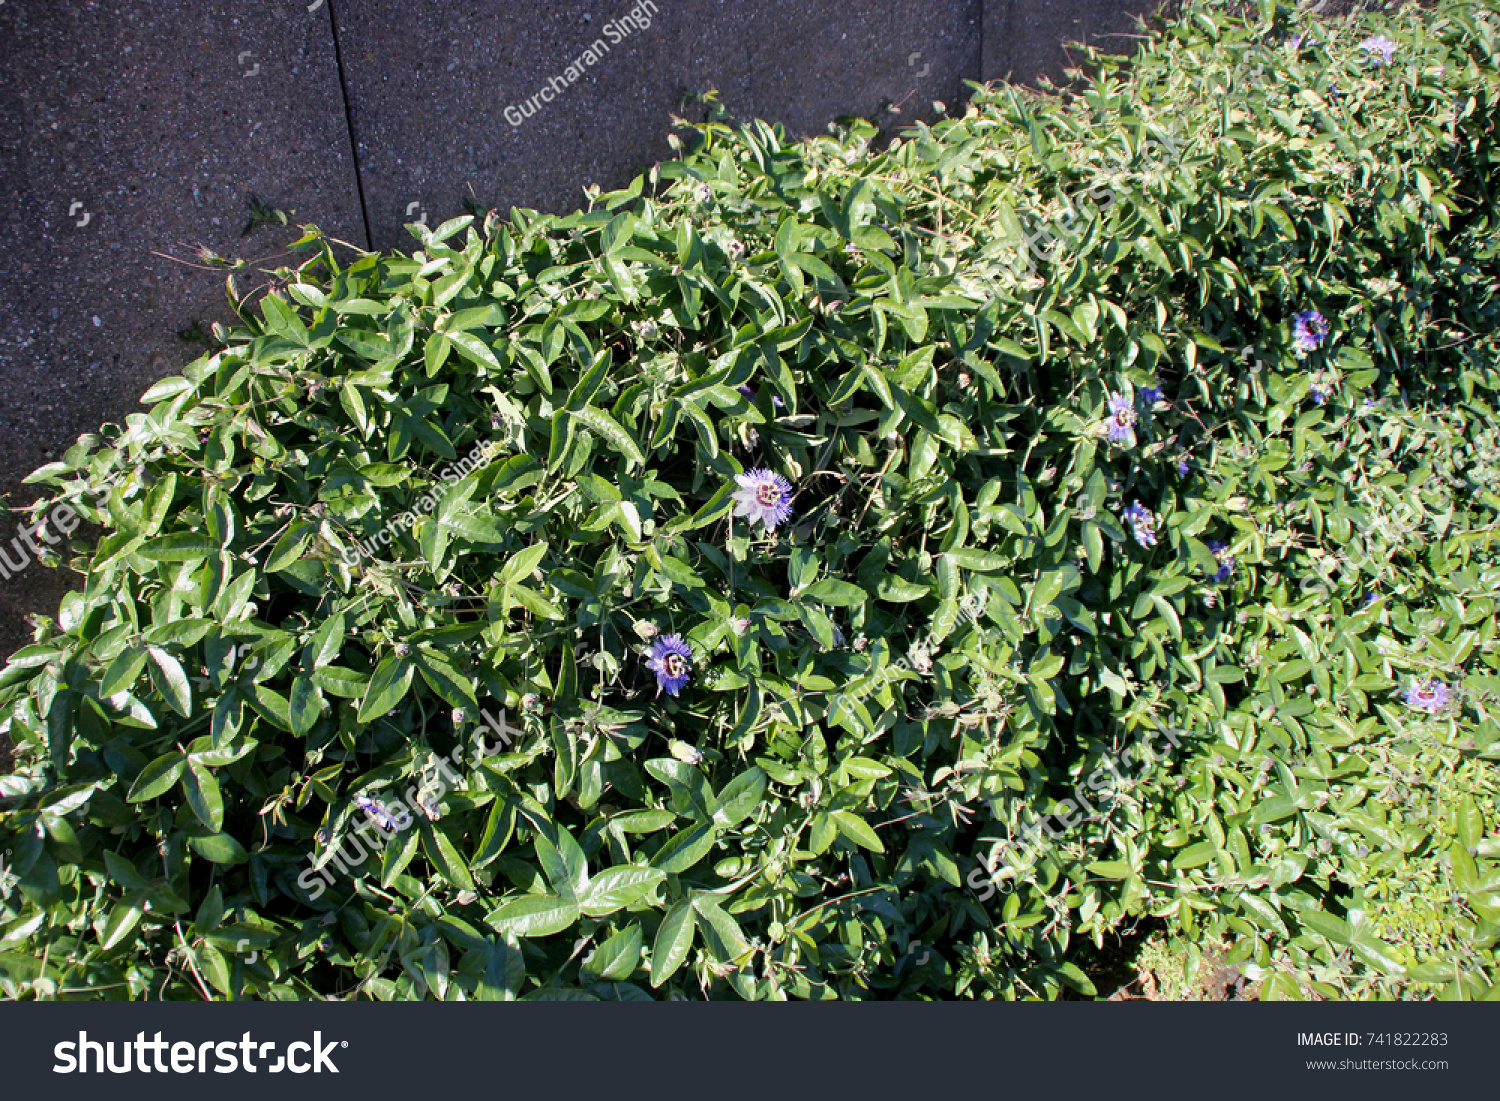 Bluecrown Passionflower Brazilian Passionflower Passiflora Caerulea Stock Photo Edit Now 741822283